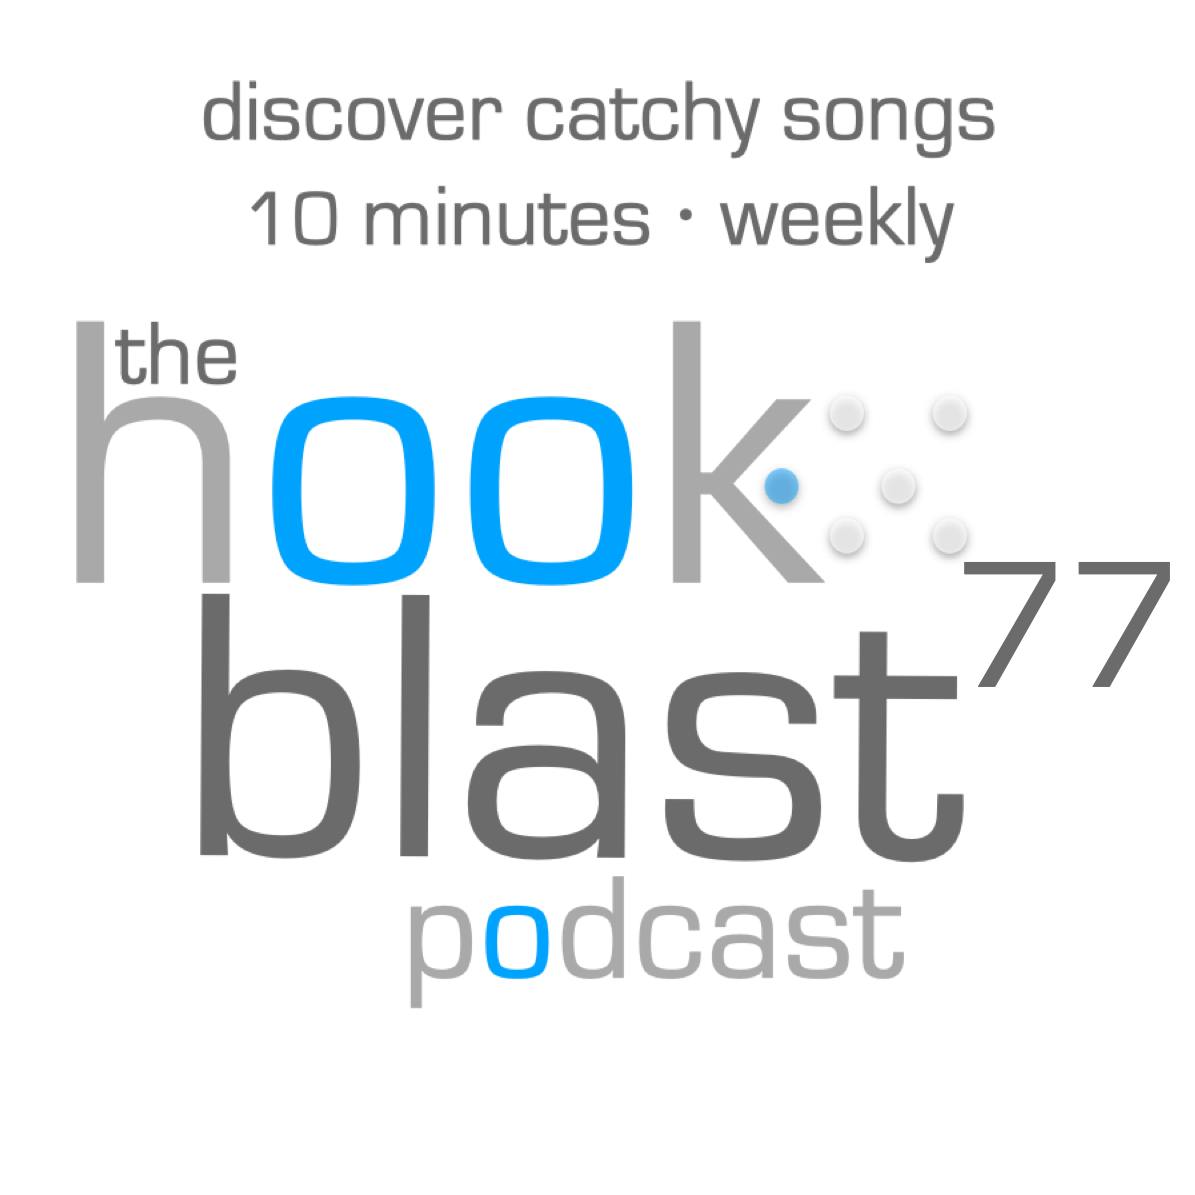 The Hookblast Podcast - Episode 77